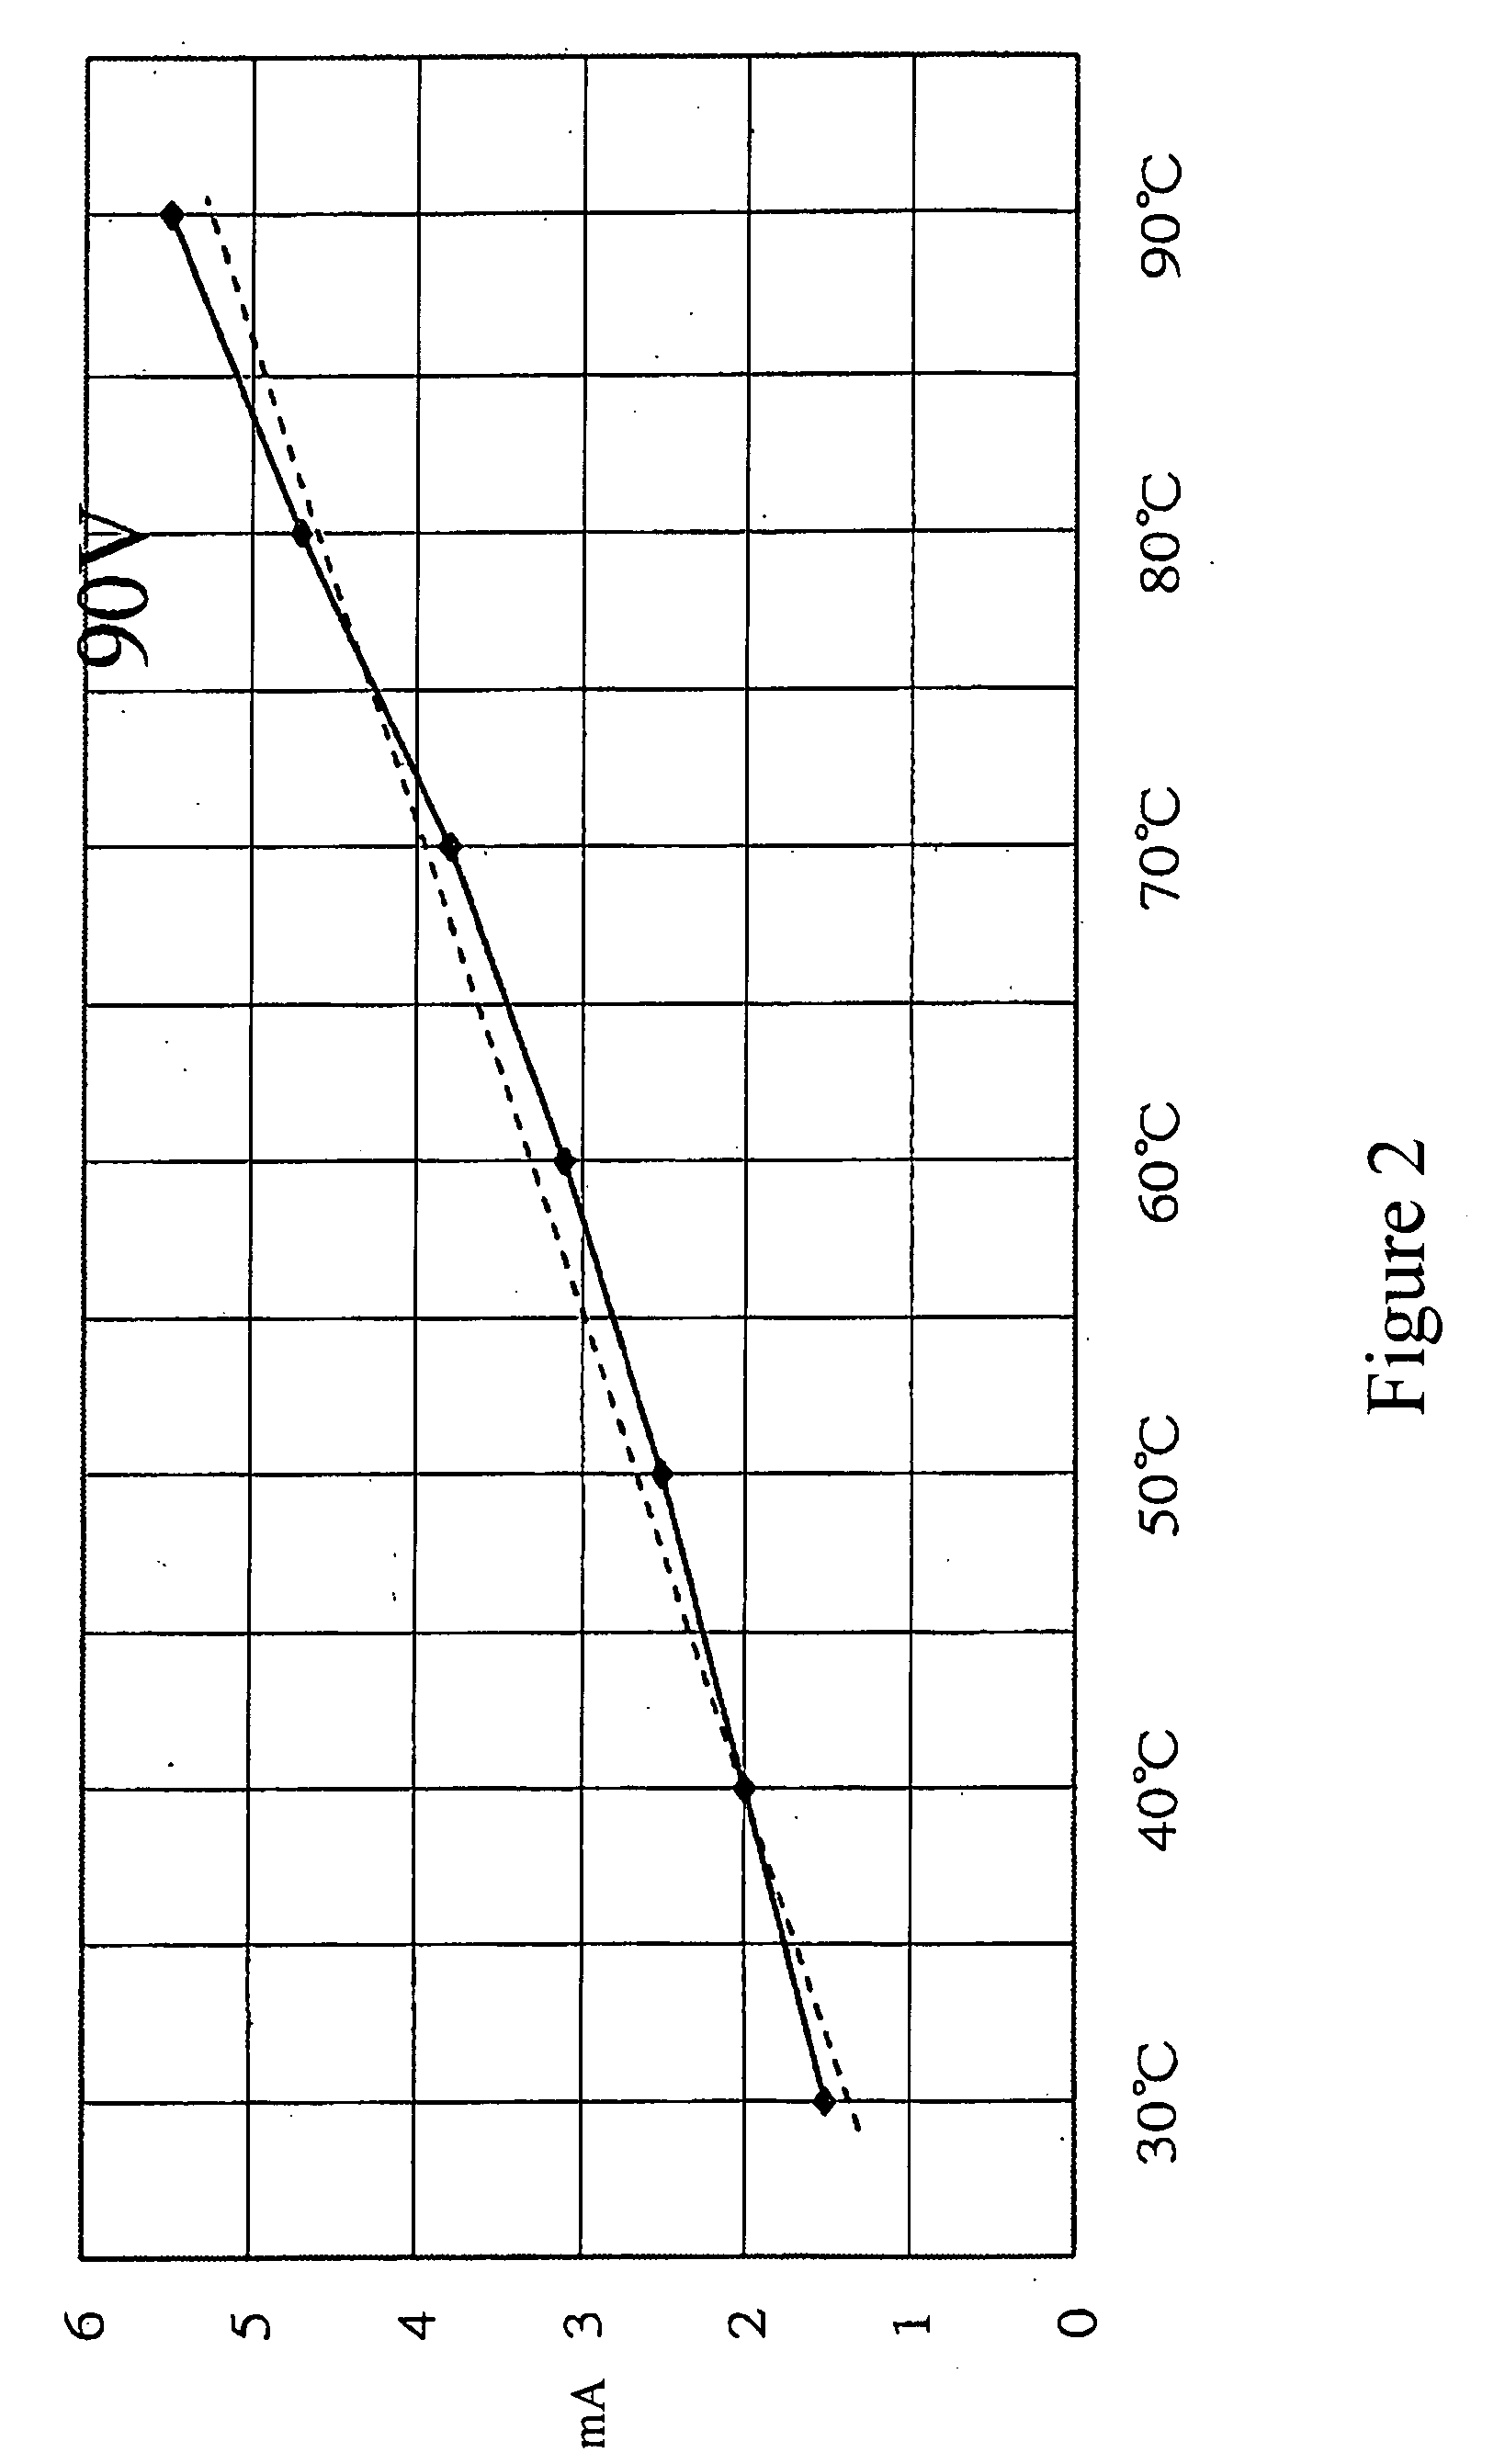 Method for Measuring PN-Junction Temperature of Light-Emitting Diode (LED)